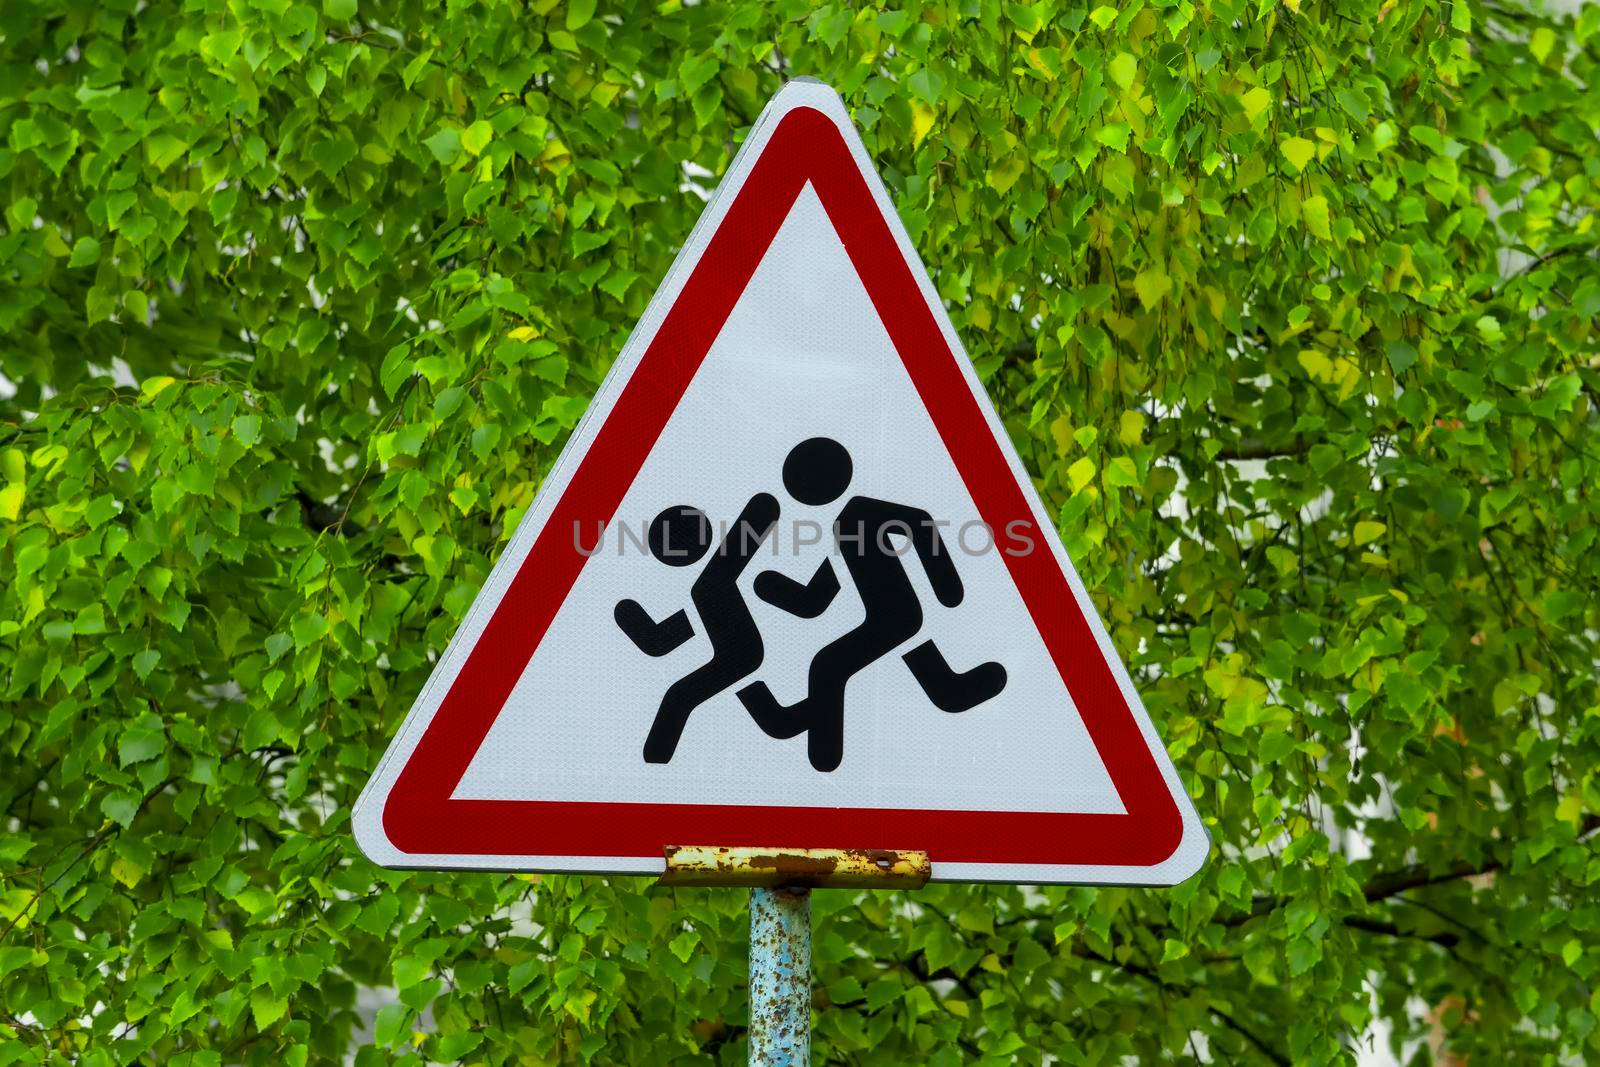 Road sign careful children. Danger for him. by Essffes